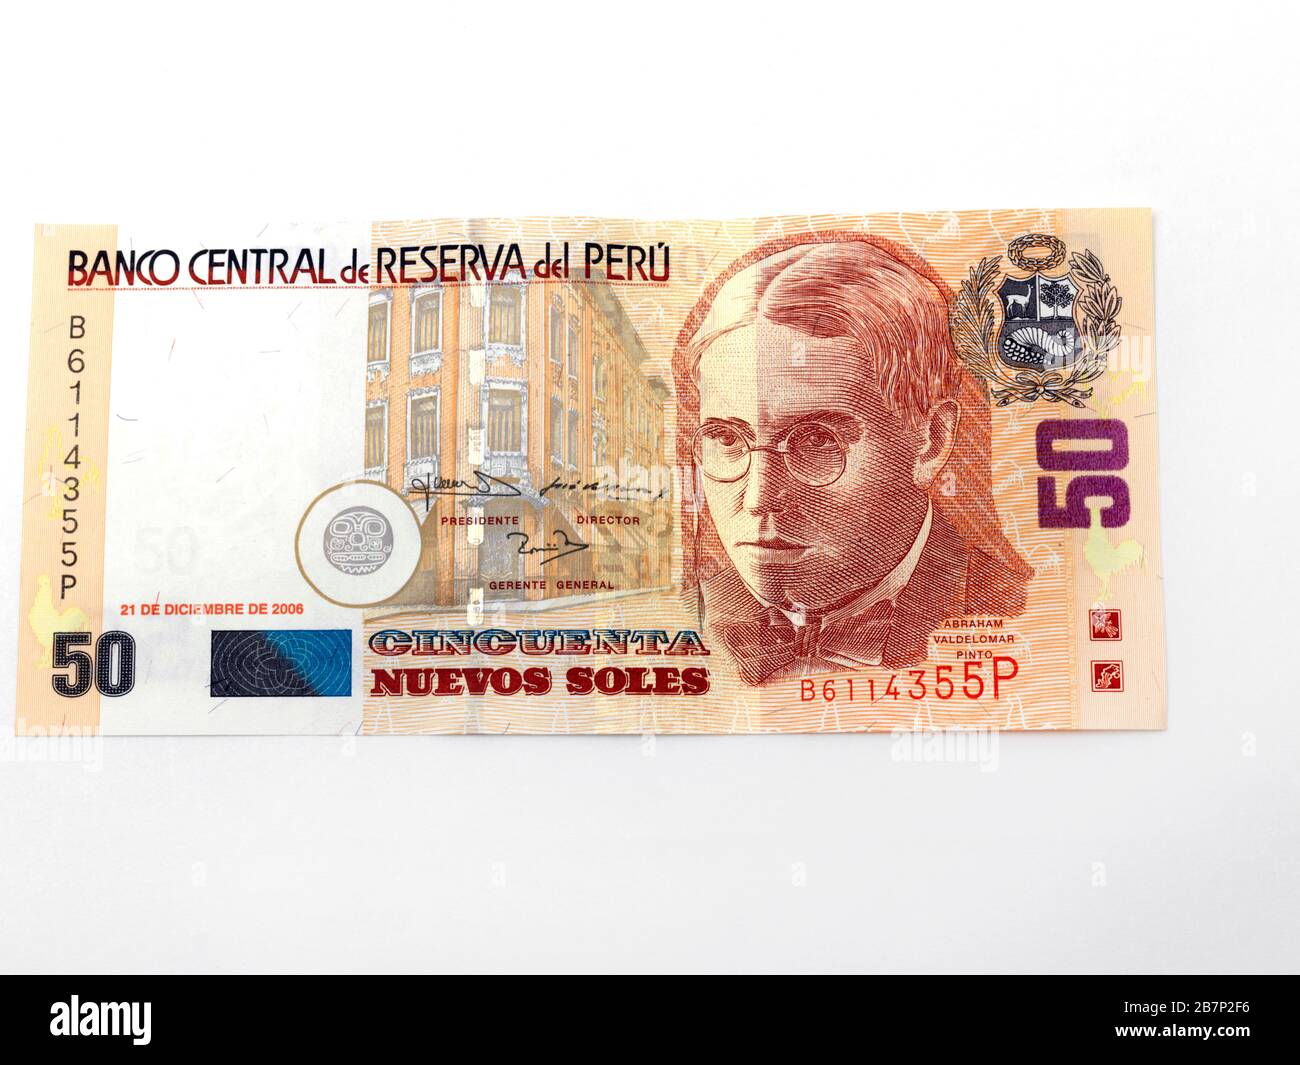 Banco Central De Reserva dd Peru Fifty Nuevos Soles Banknote depicting Abraham Valedolmar Peruvian wrter, Narrator and Poet Stock Photo